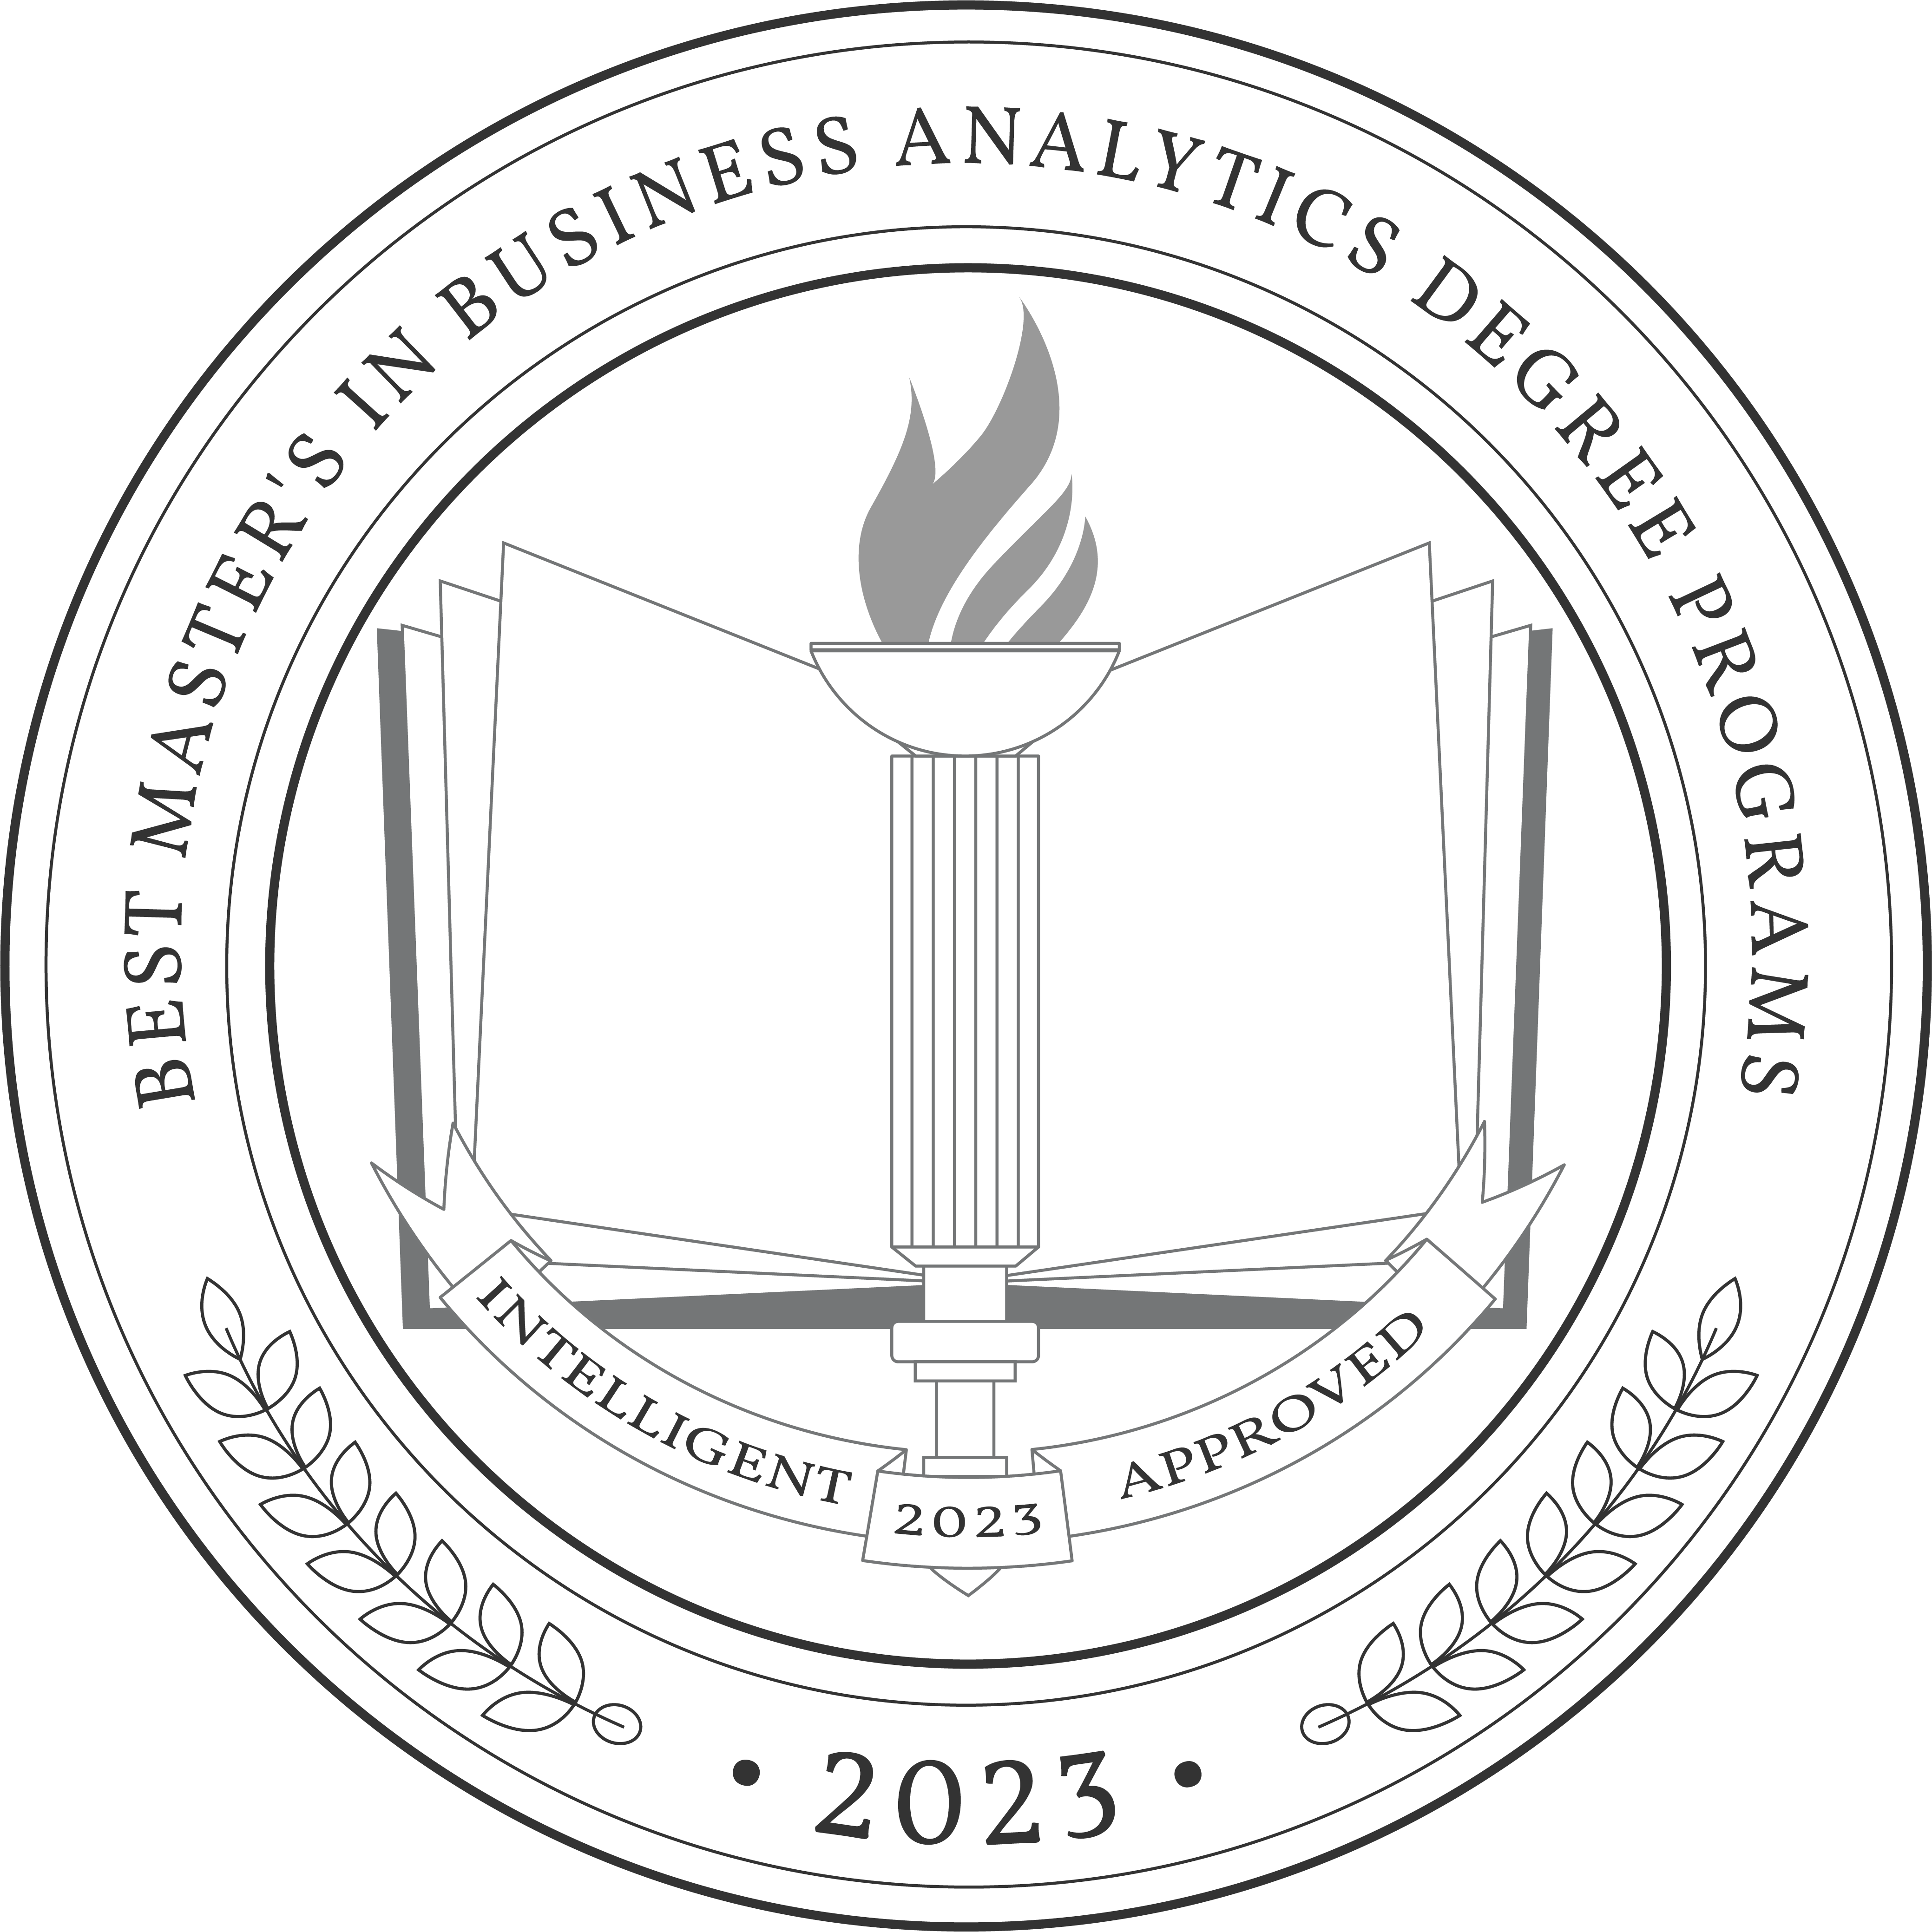 Best Online Master's in Business Analytics Programs in 2023 - Fortune